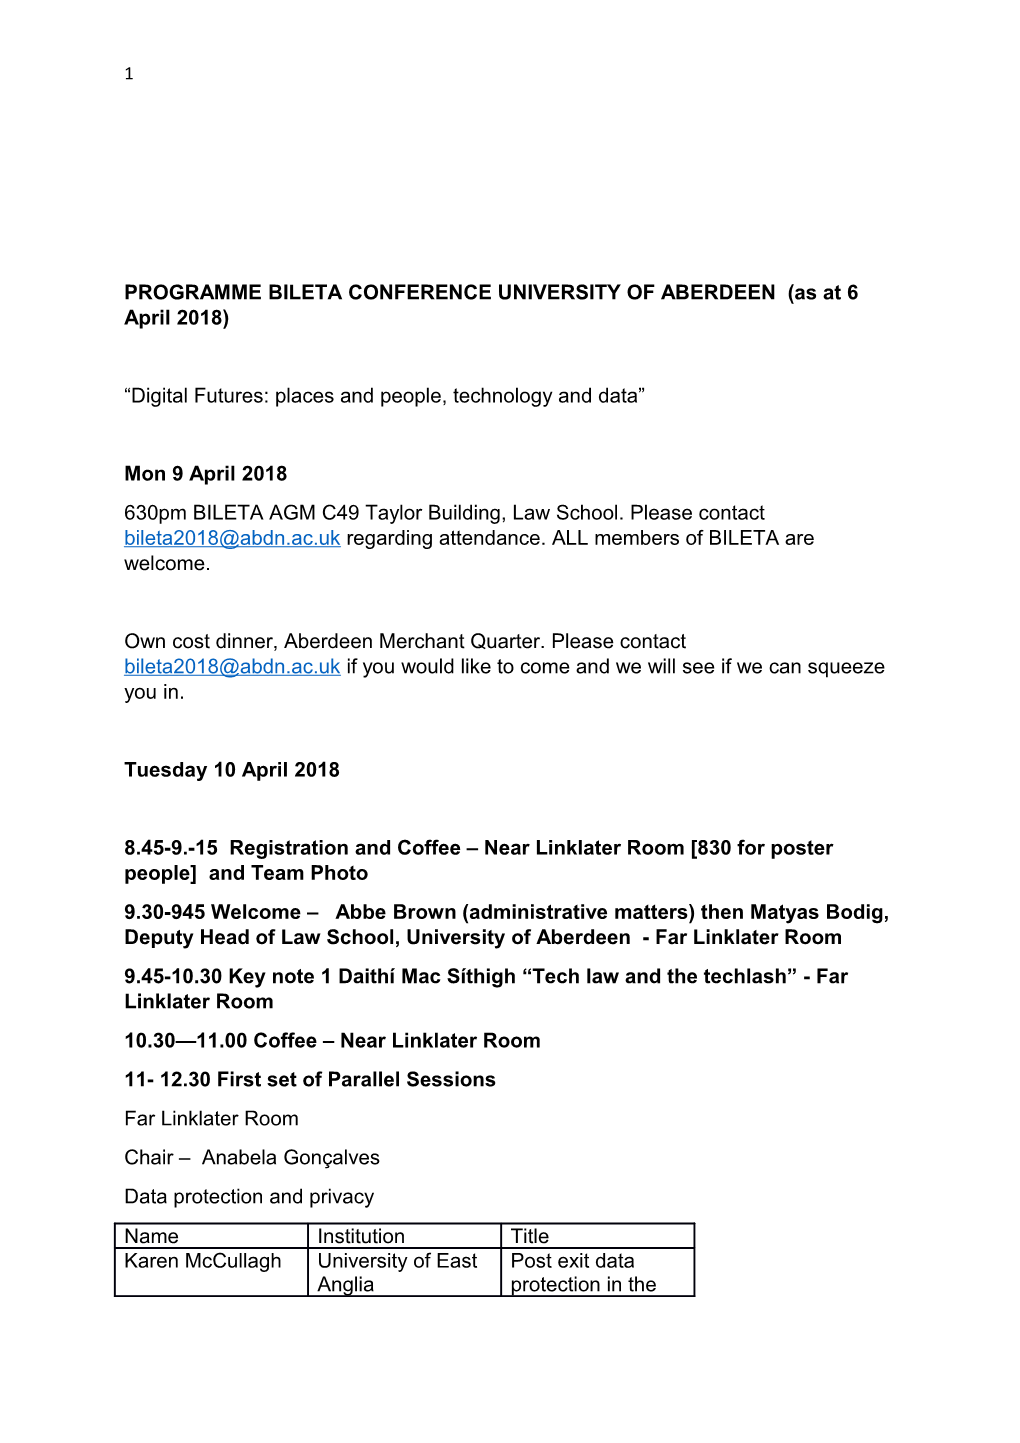 PROGRAMME BILETA CONFERENCE UNIVERSITY of ABERDEEN (As at 6April 2018)